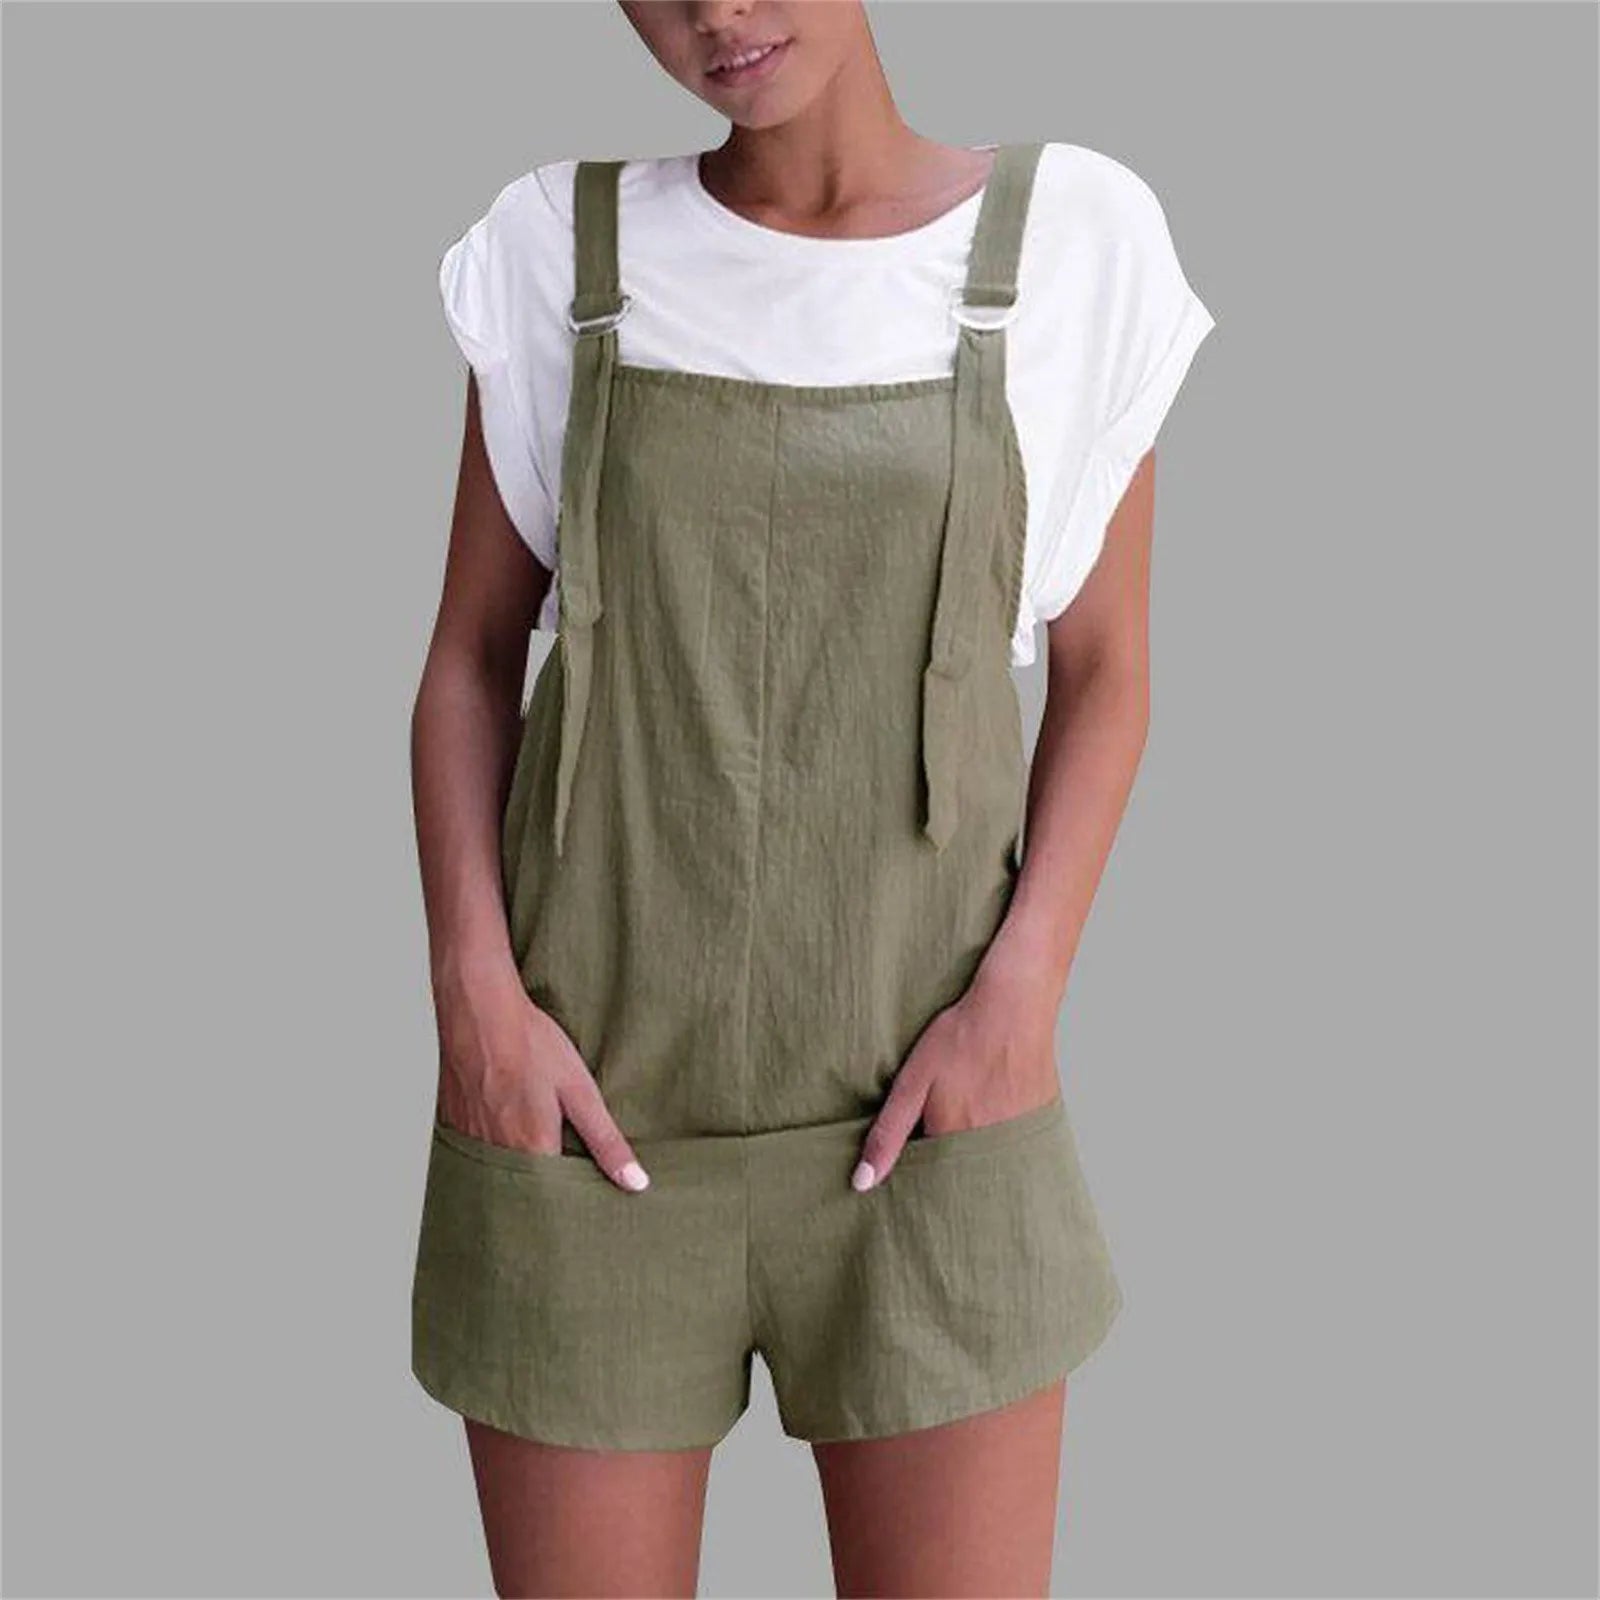 Vintage Sleeveless Cotton Linen Bib Overalls: Summer Women's Playsuit with Button Pockets